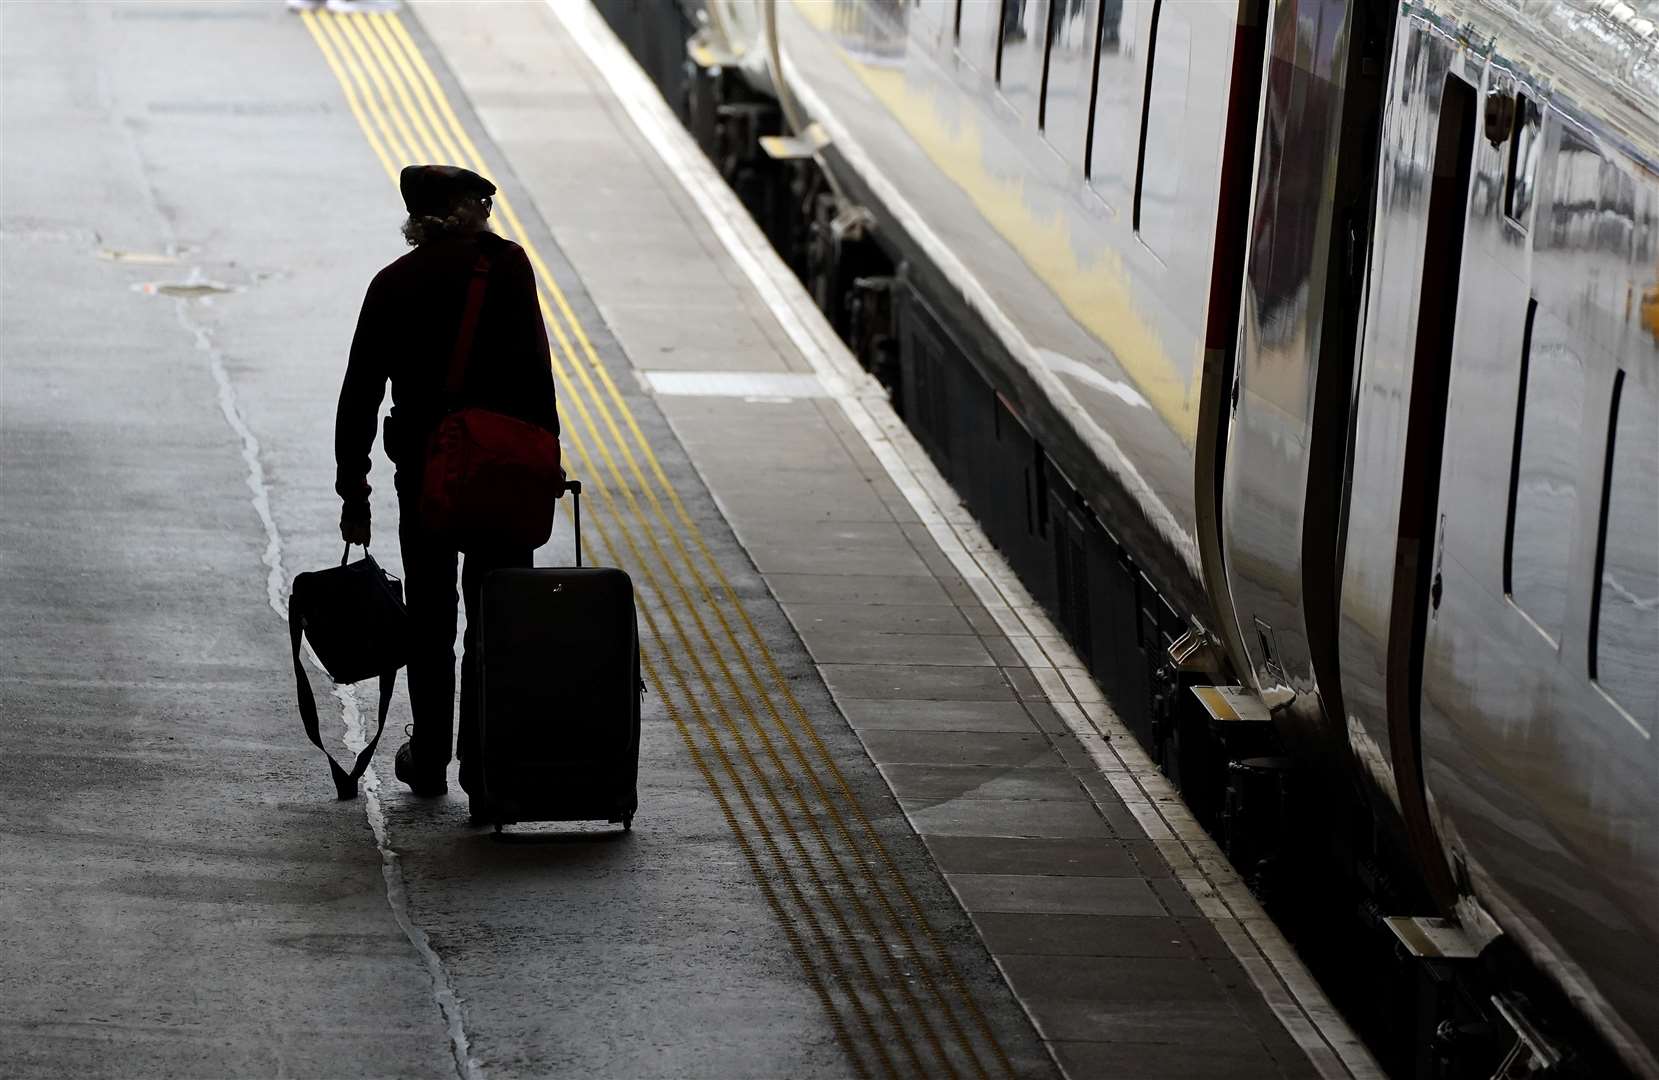 A passenger walks along a platform at Waverley station in Edinburgh (Andrew Milligan/PA)